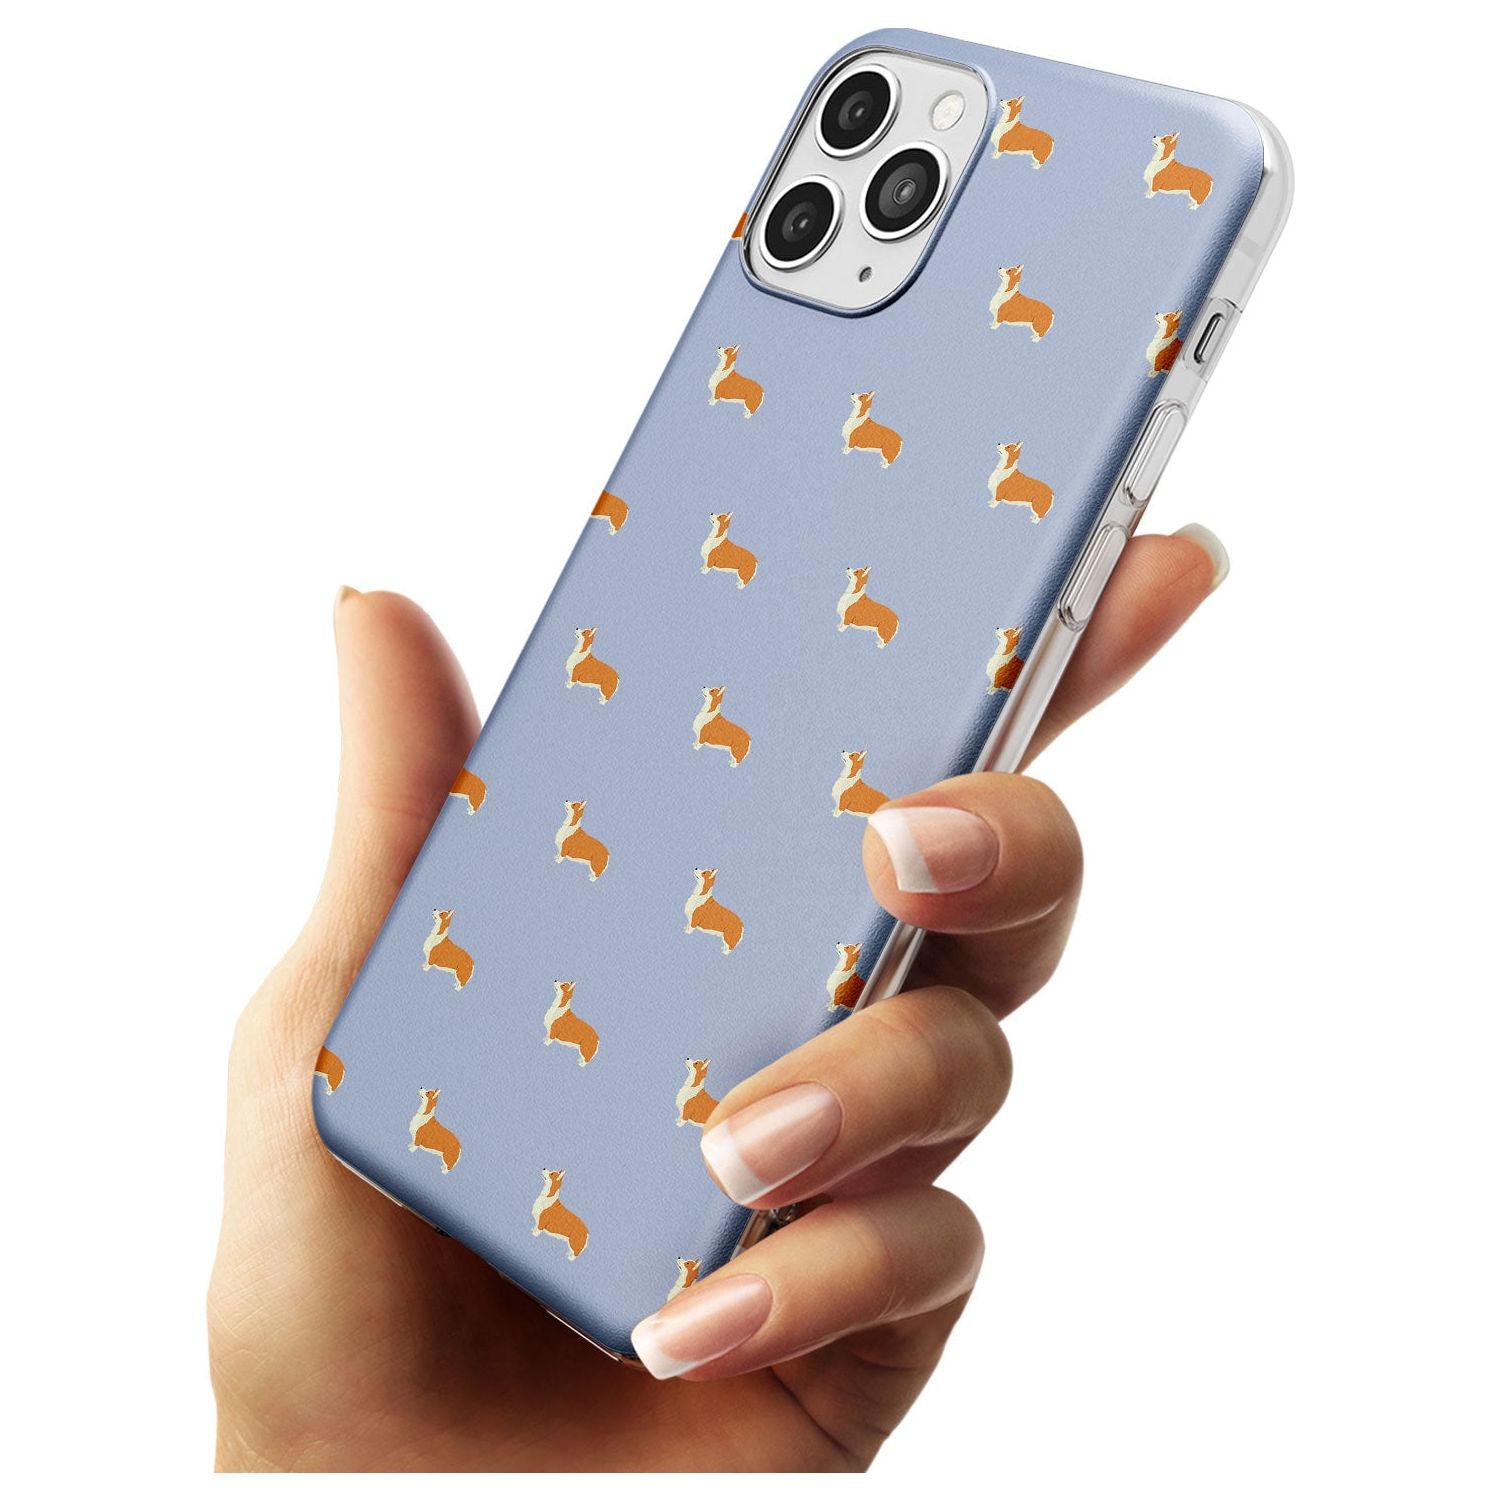 Pembroke Welsh Corgi Dog Pattern Slim TPU Phone Case for iPhone 11 Pro Max